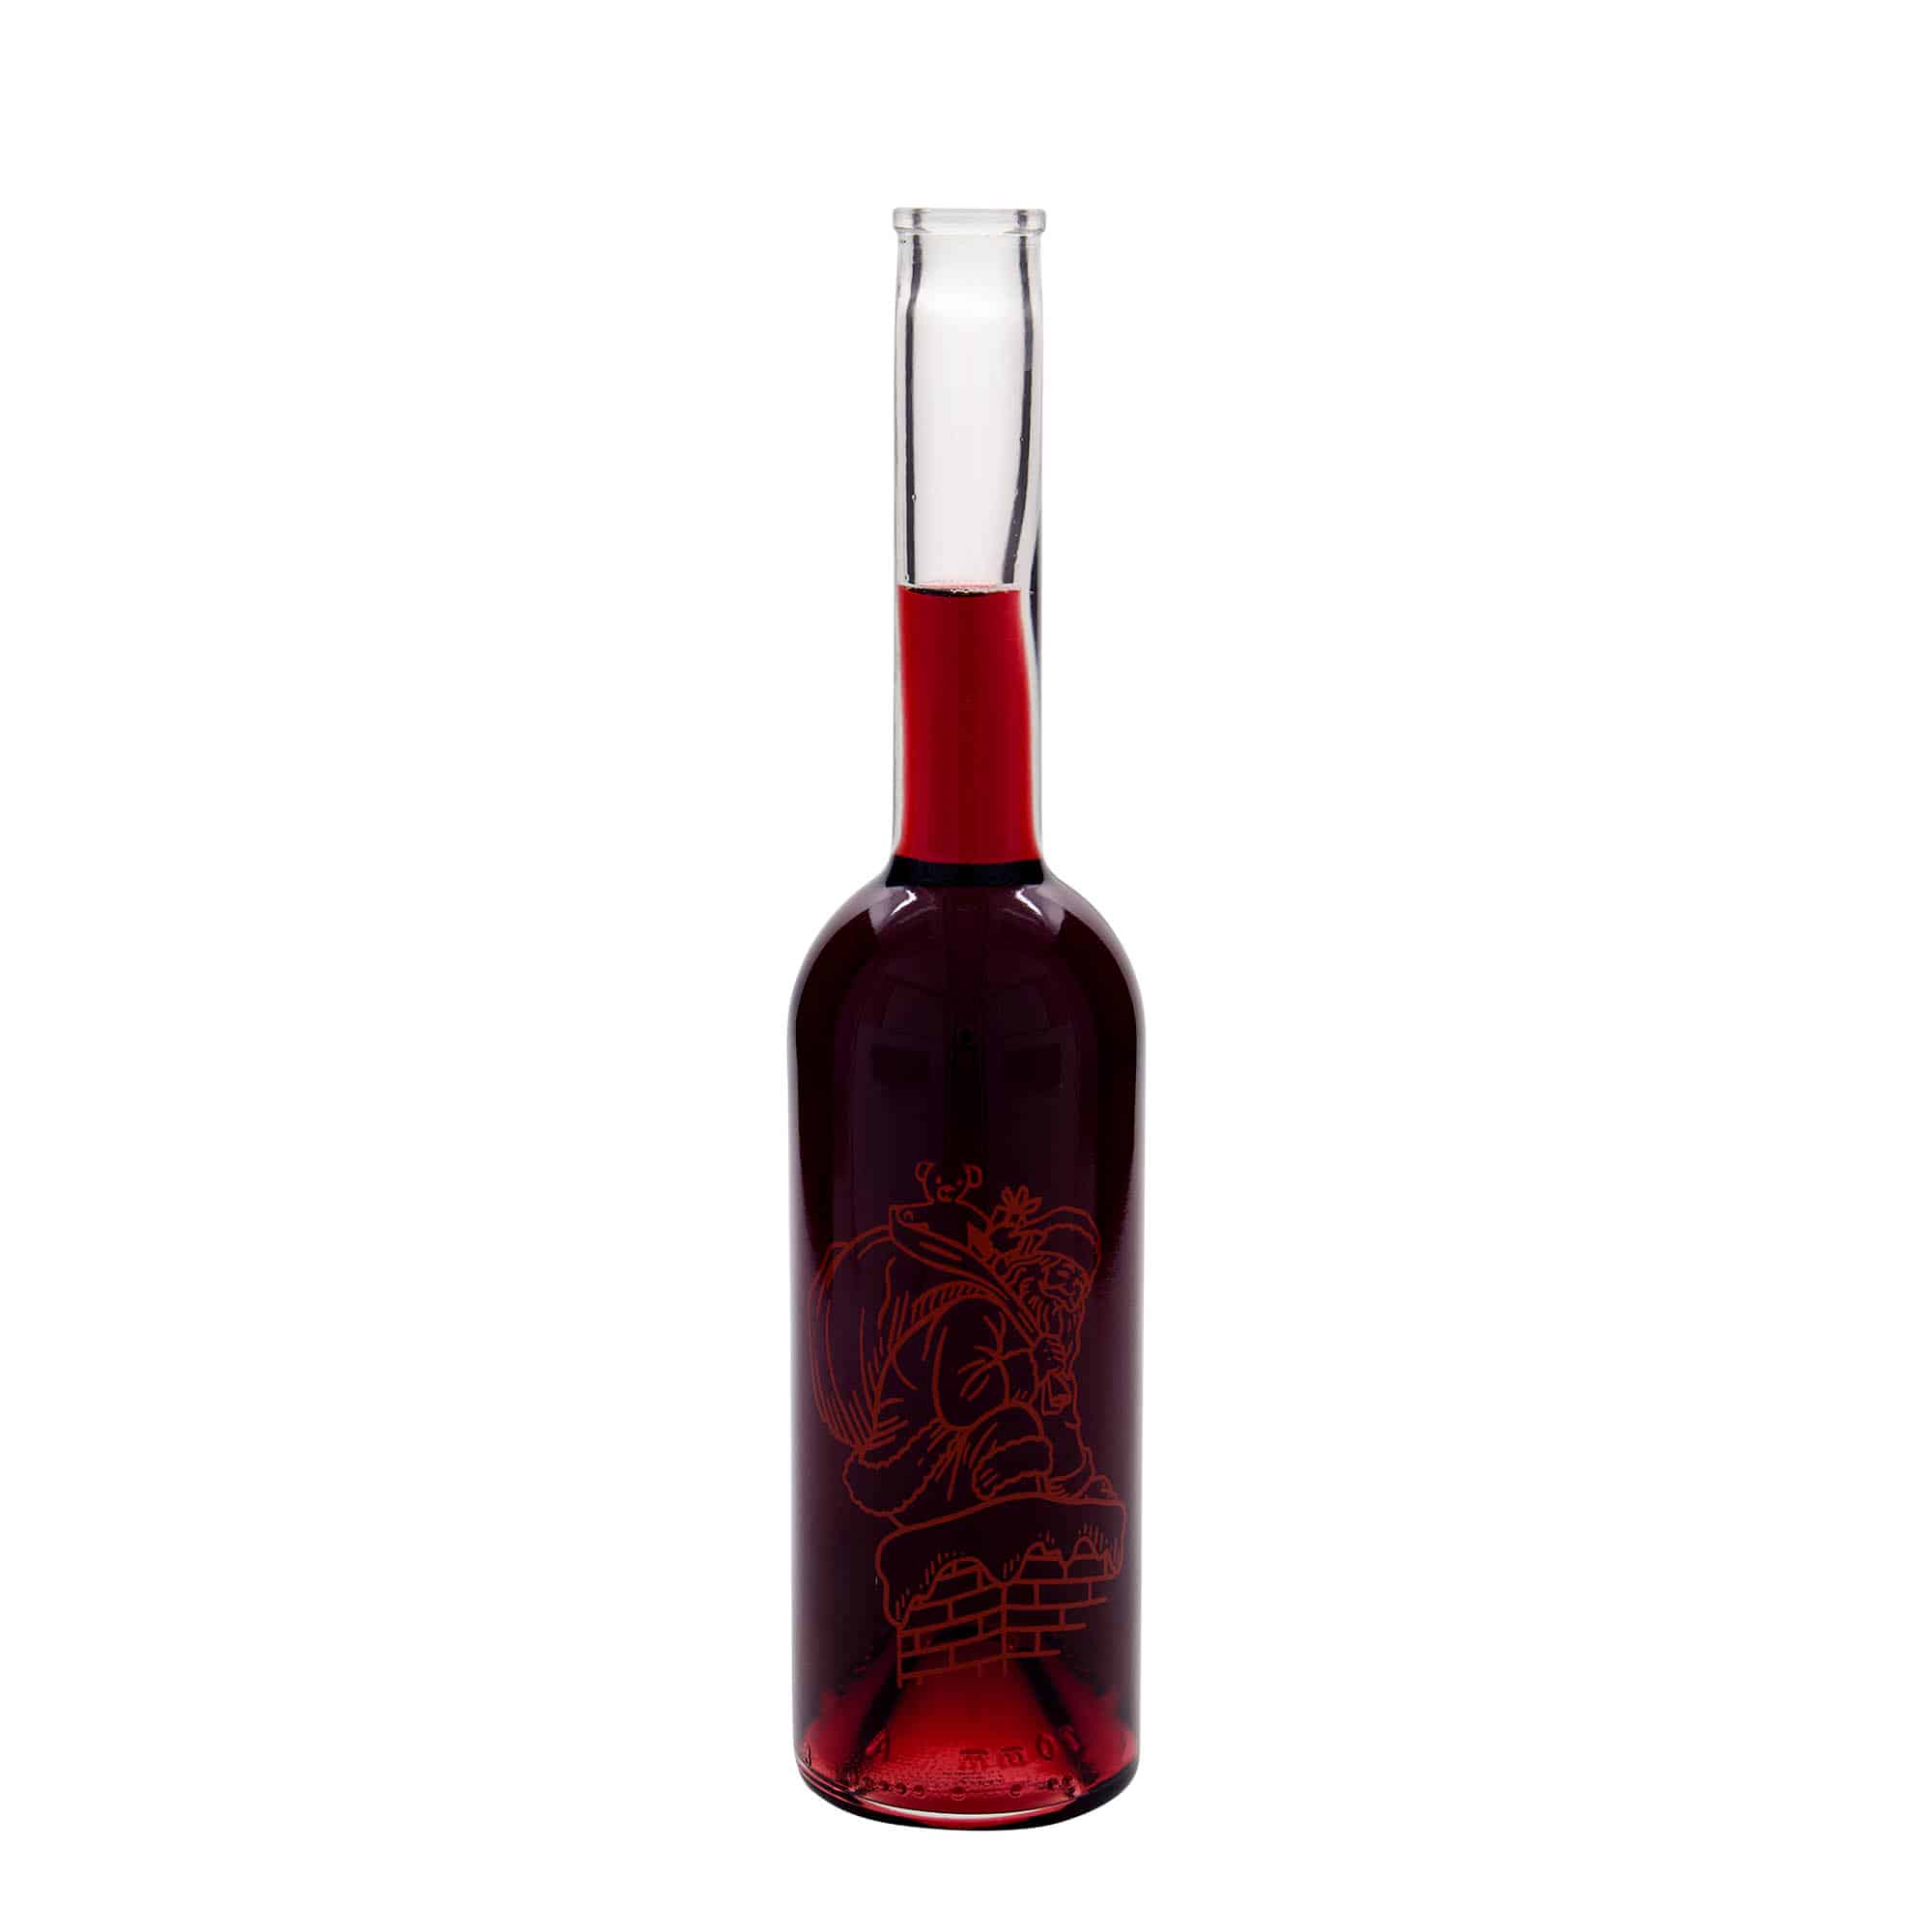 500 ml glass bottle 'Opera', print: gifts, closure: cork